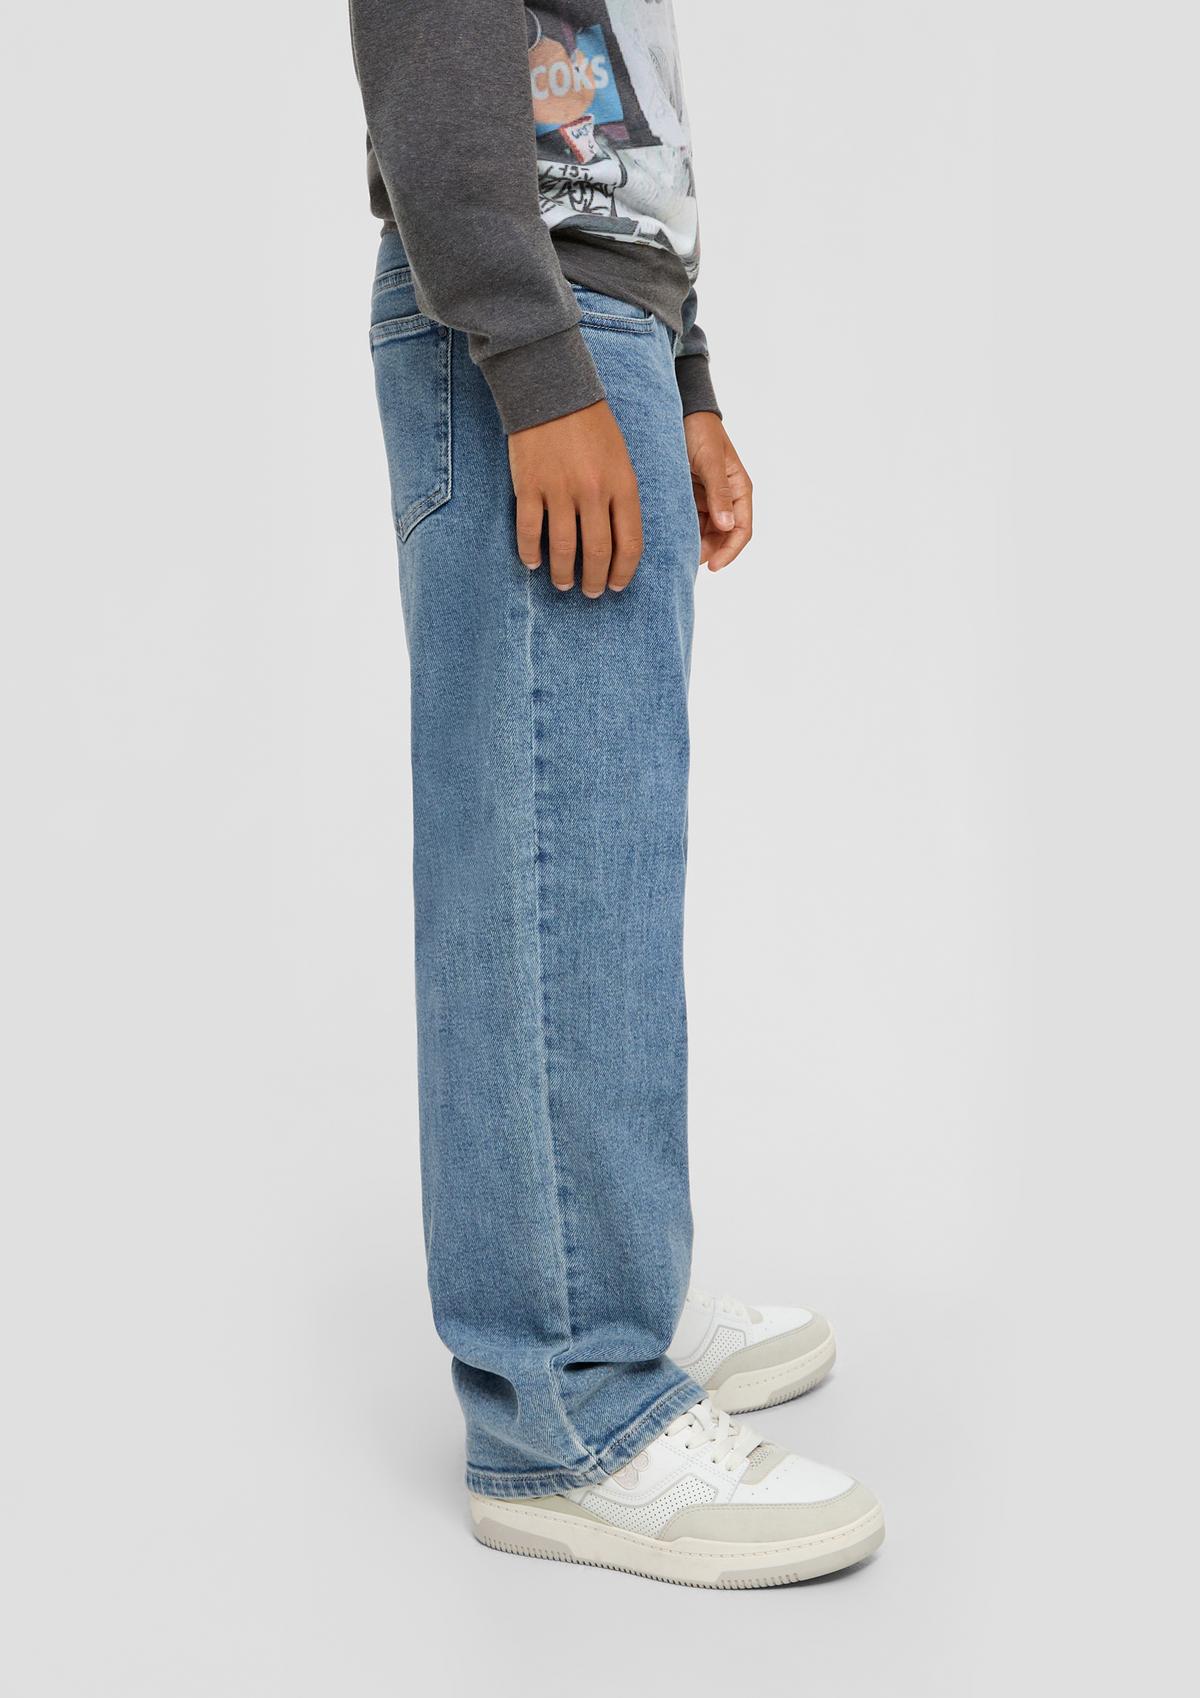 s.Oliver Jeans / Regular Fit / Mid Rise / Semi wide Leg